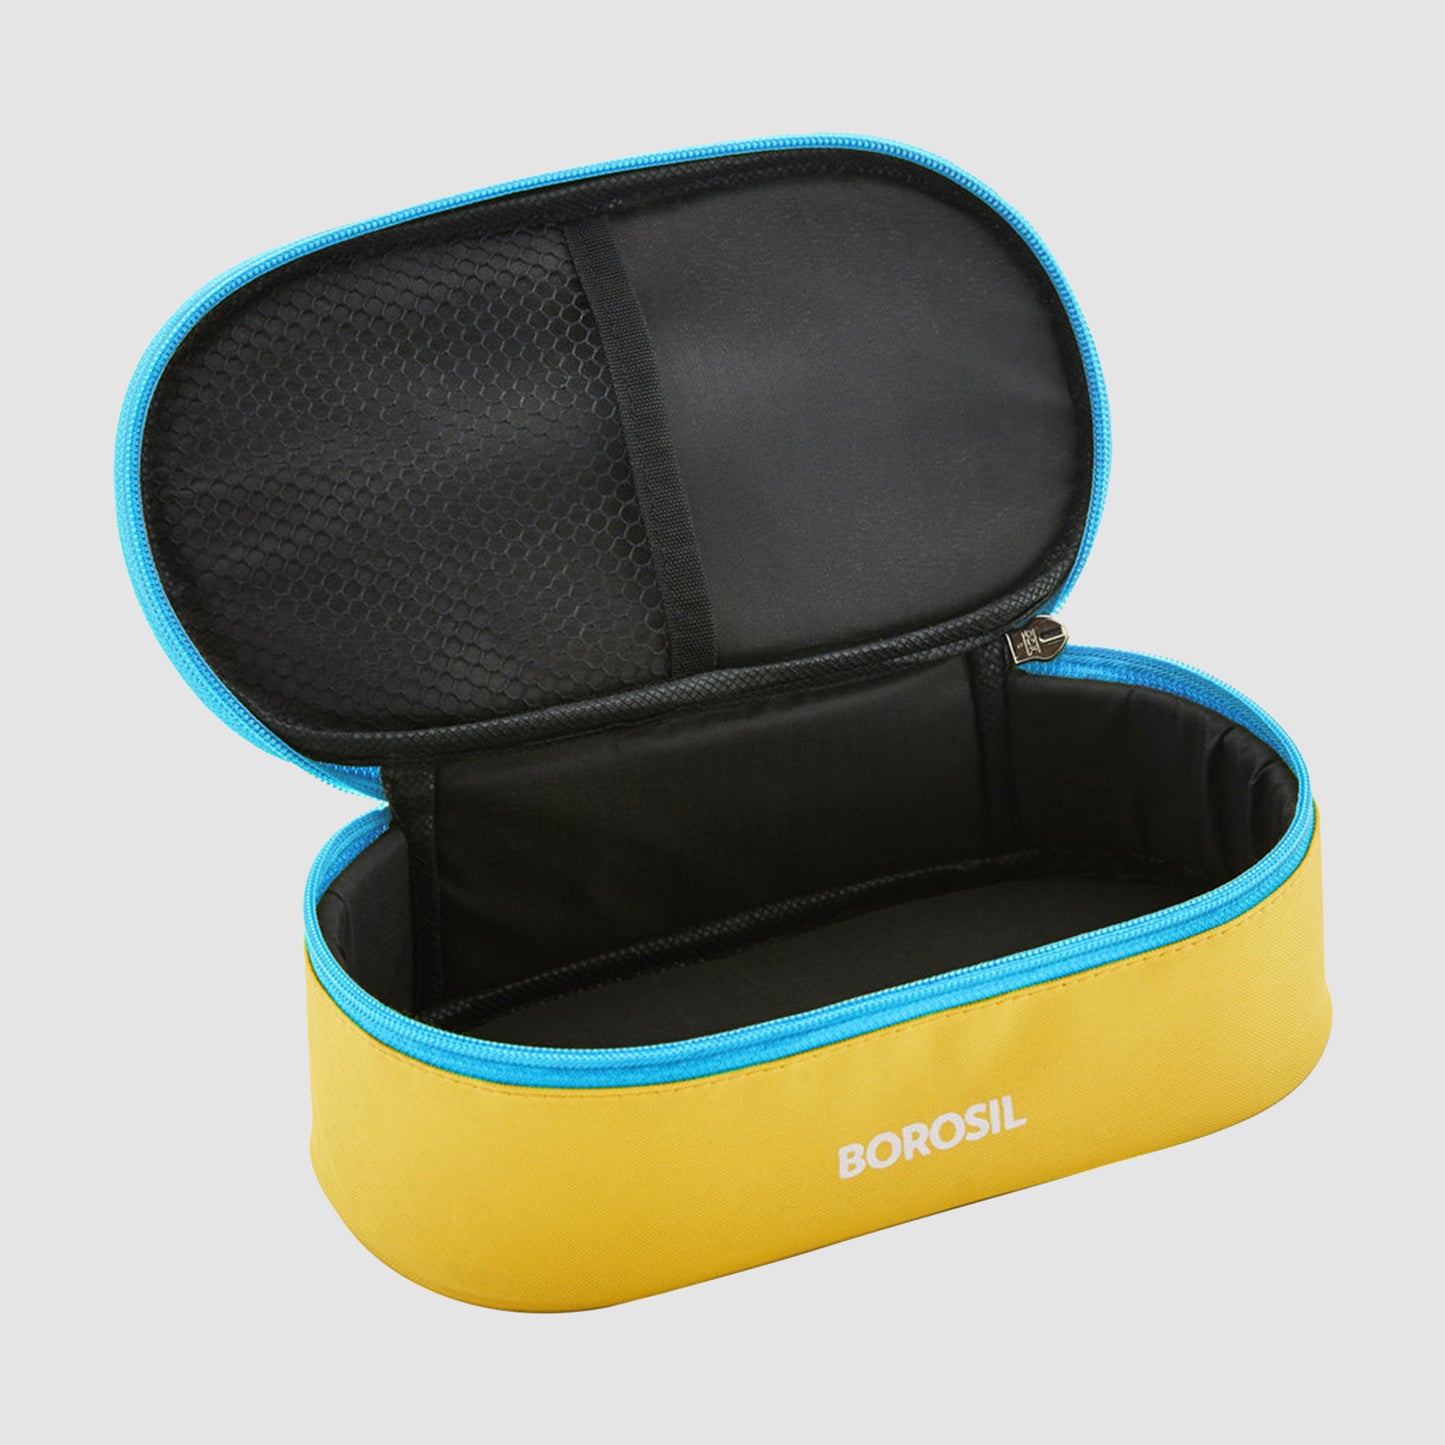 Borosil Sunshine Yellow Lunchbox- BO